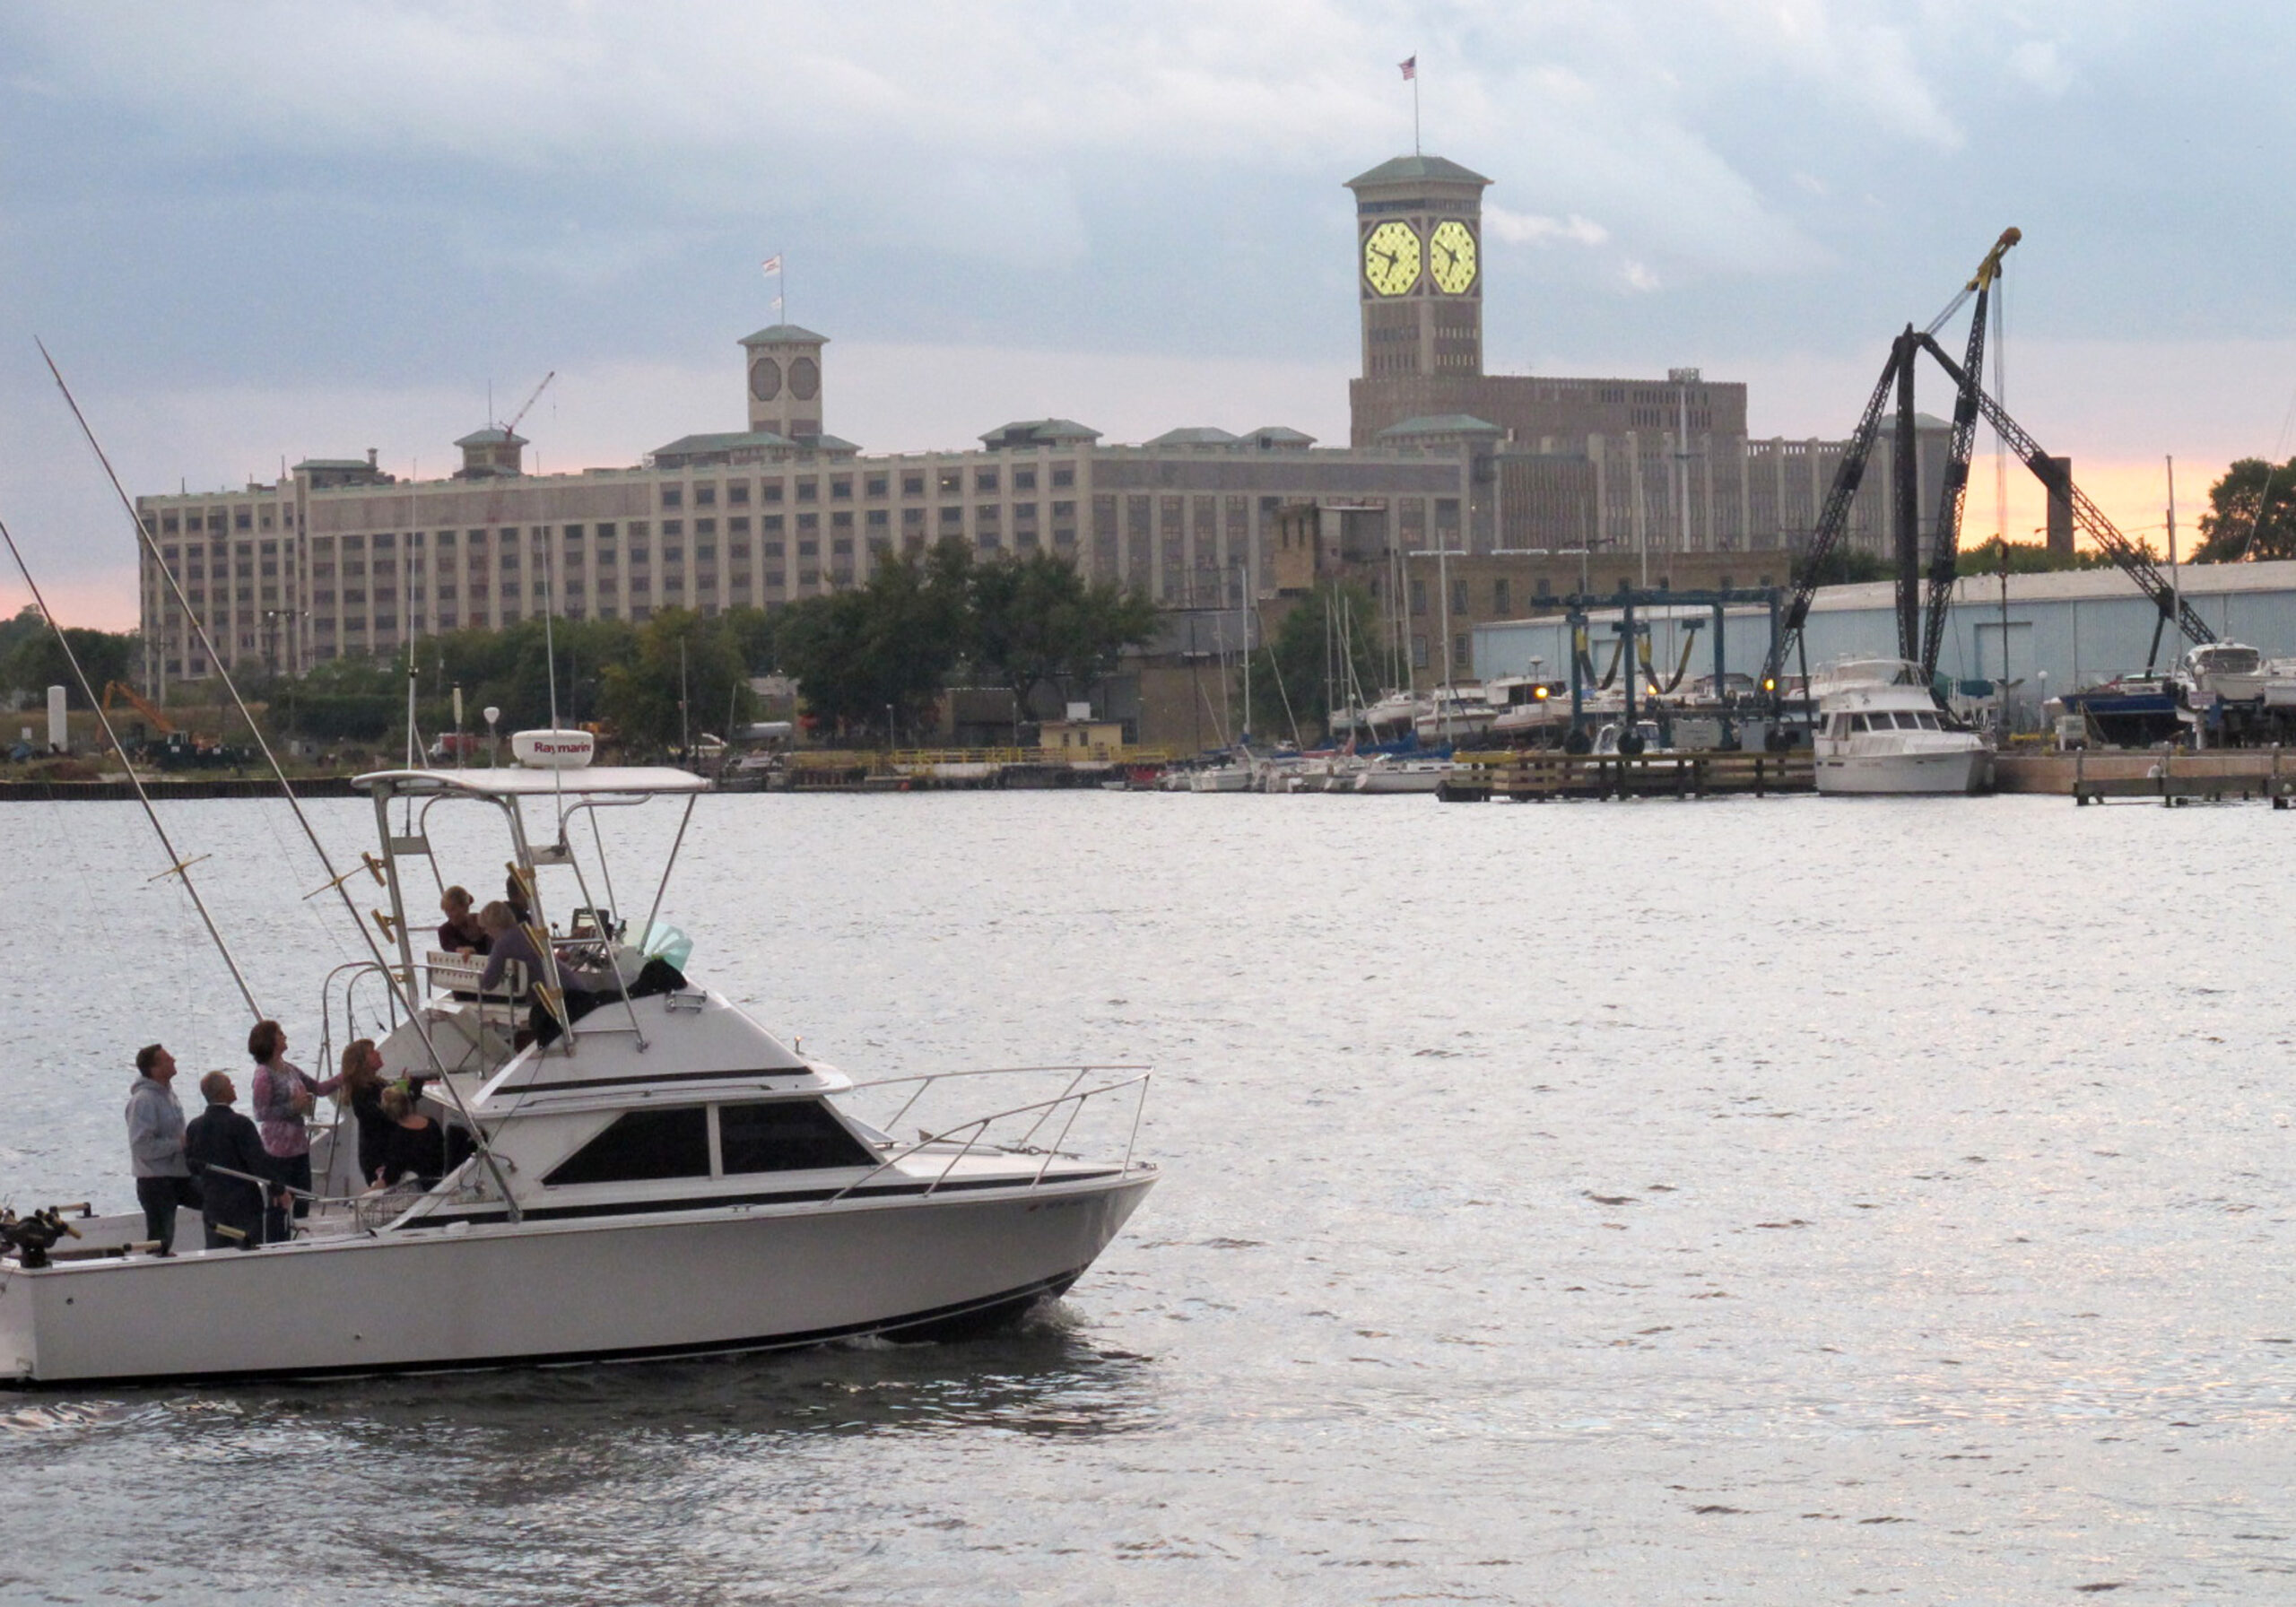 A fishing boat cruises on the Milwaukee River near Lake Michigan.